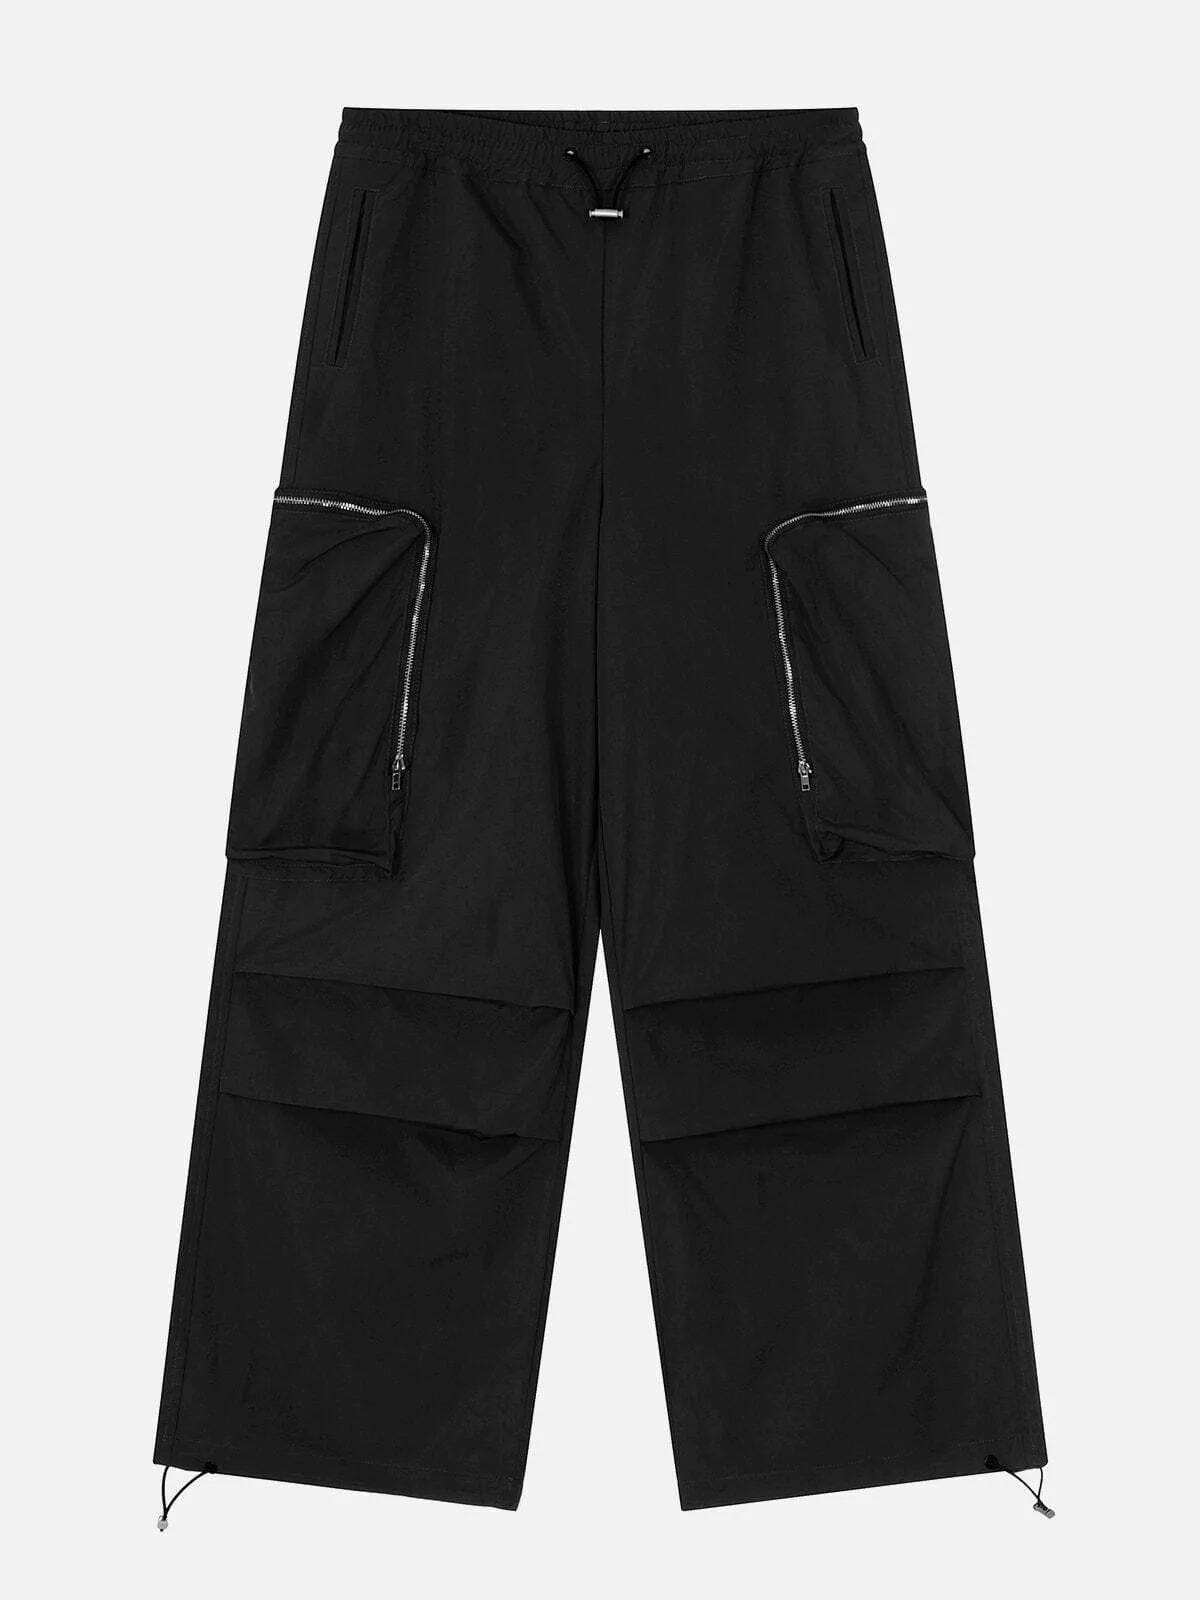 functional big pocket pants urban streetwear 4961